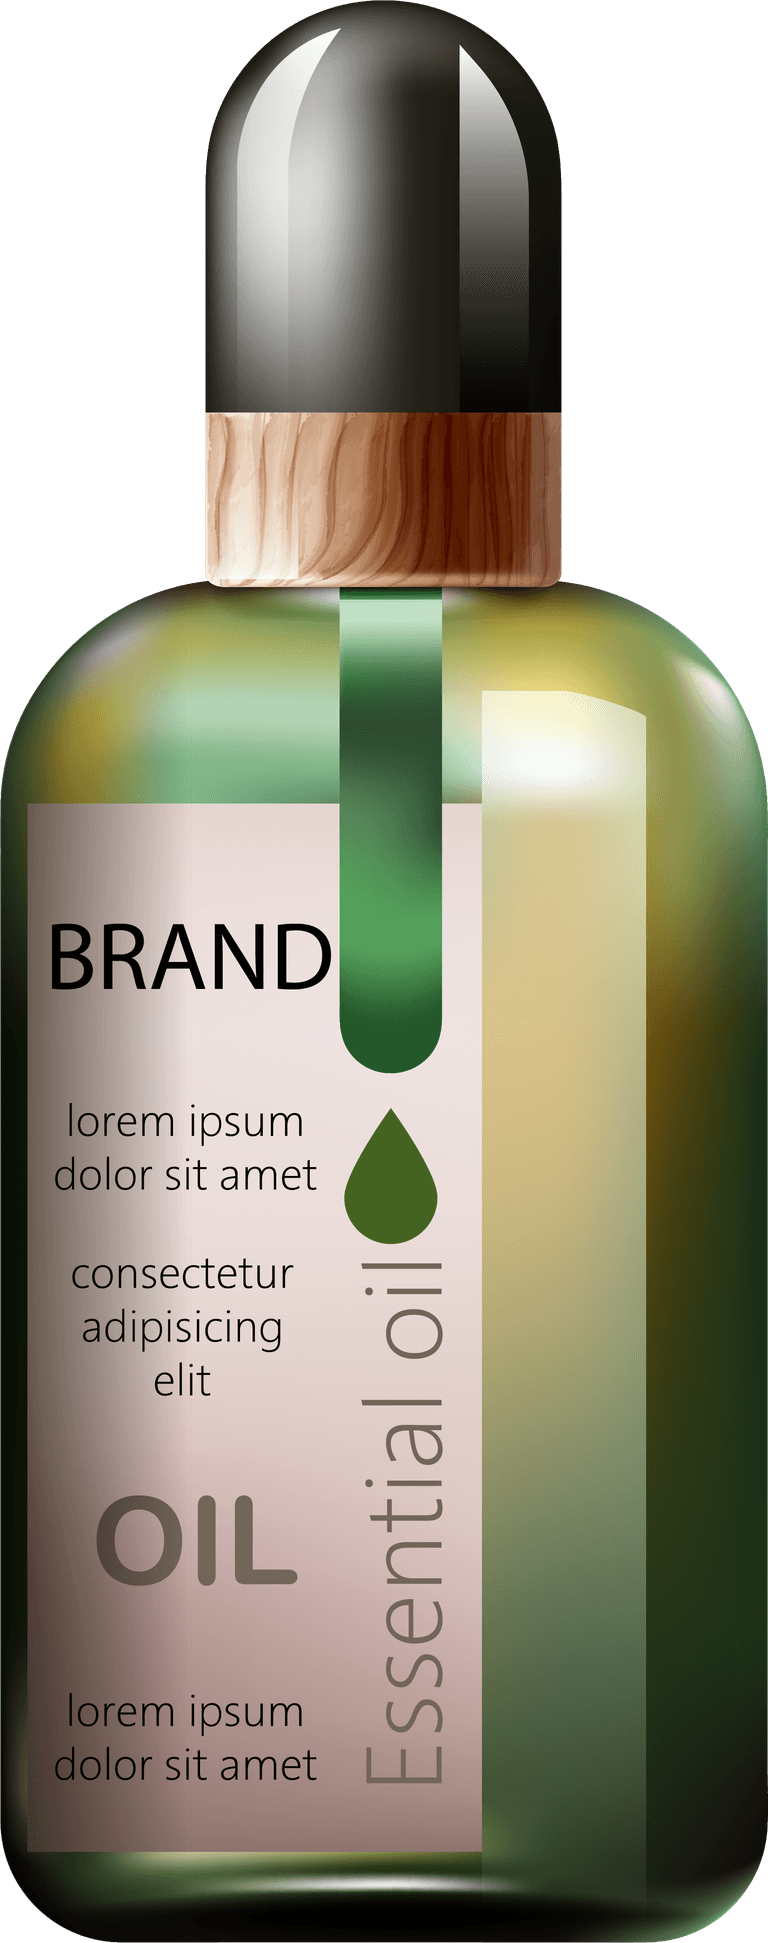 set various health care spa green bottles body oil lotion serum shower gel perfume